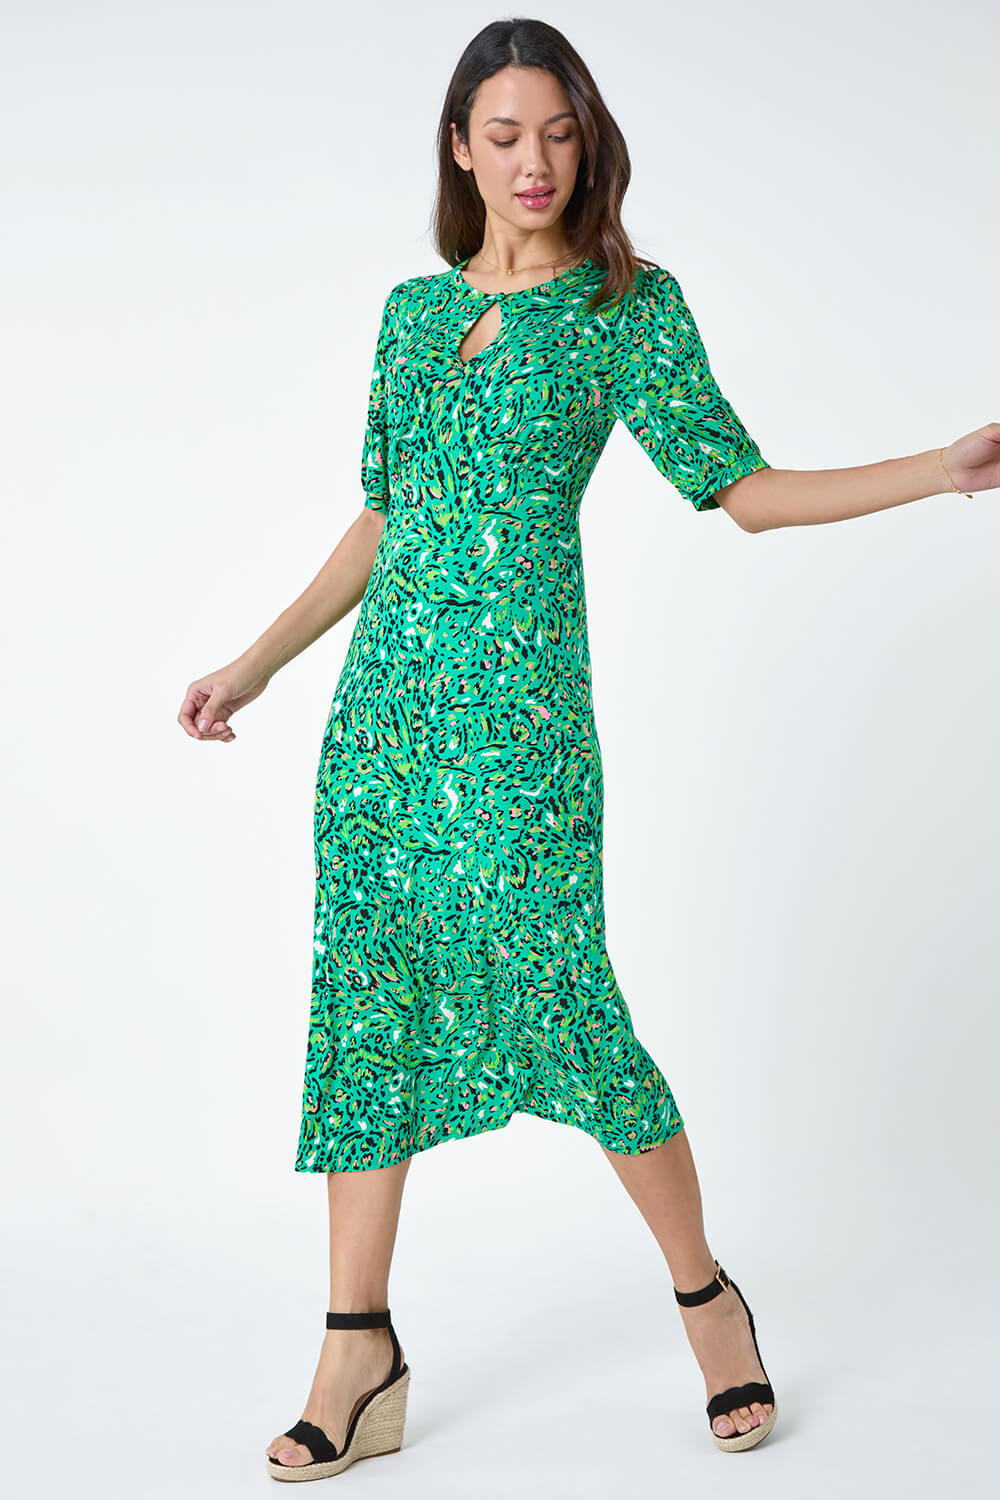 Green Animal Print Keyhole Stretch Dress, Image 2 of 5